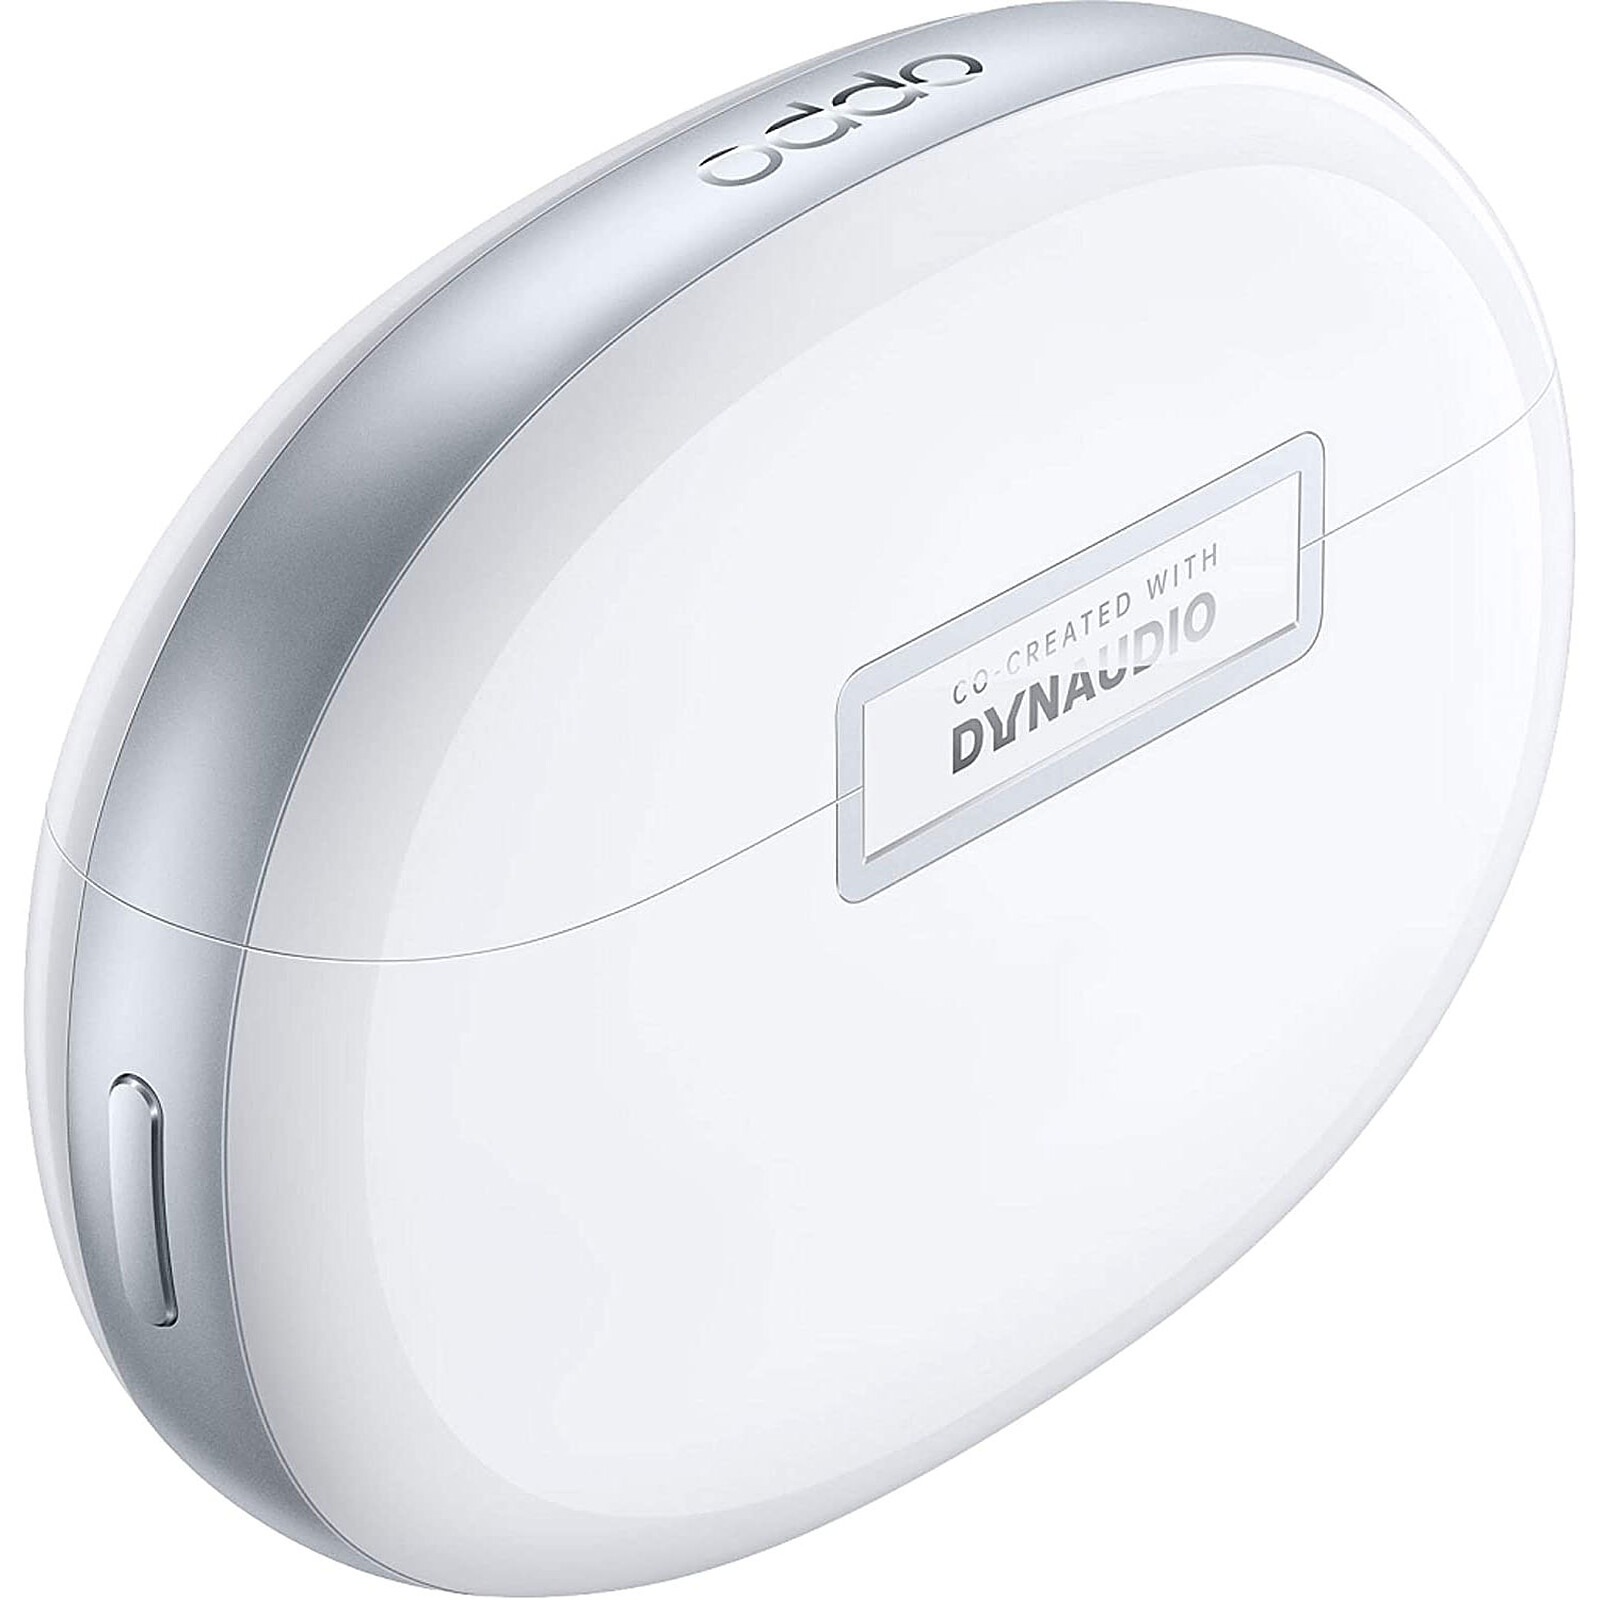 Auriculares True Wireless  Oppo Enco Buds 2, Intraurales, Bluetooth 5.2,  Resistentes agua, Blanco